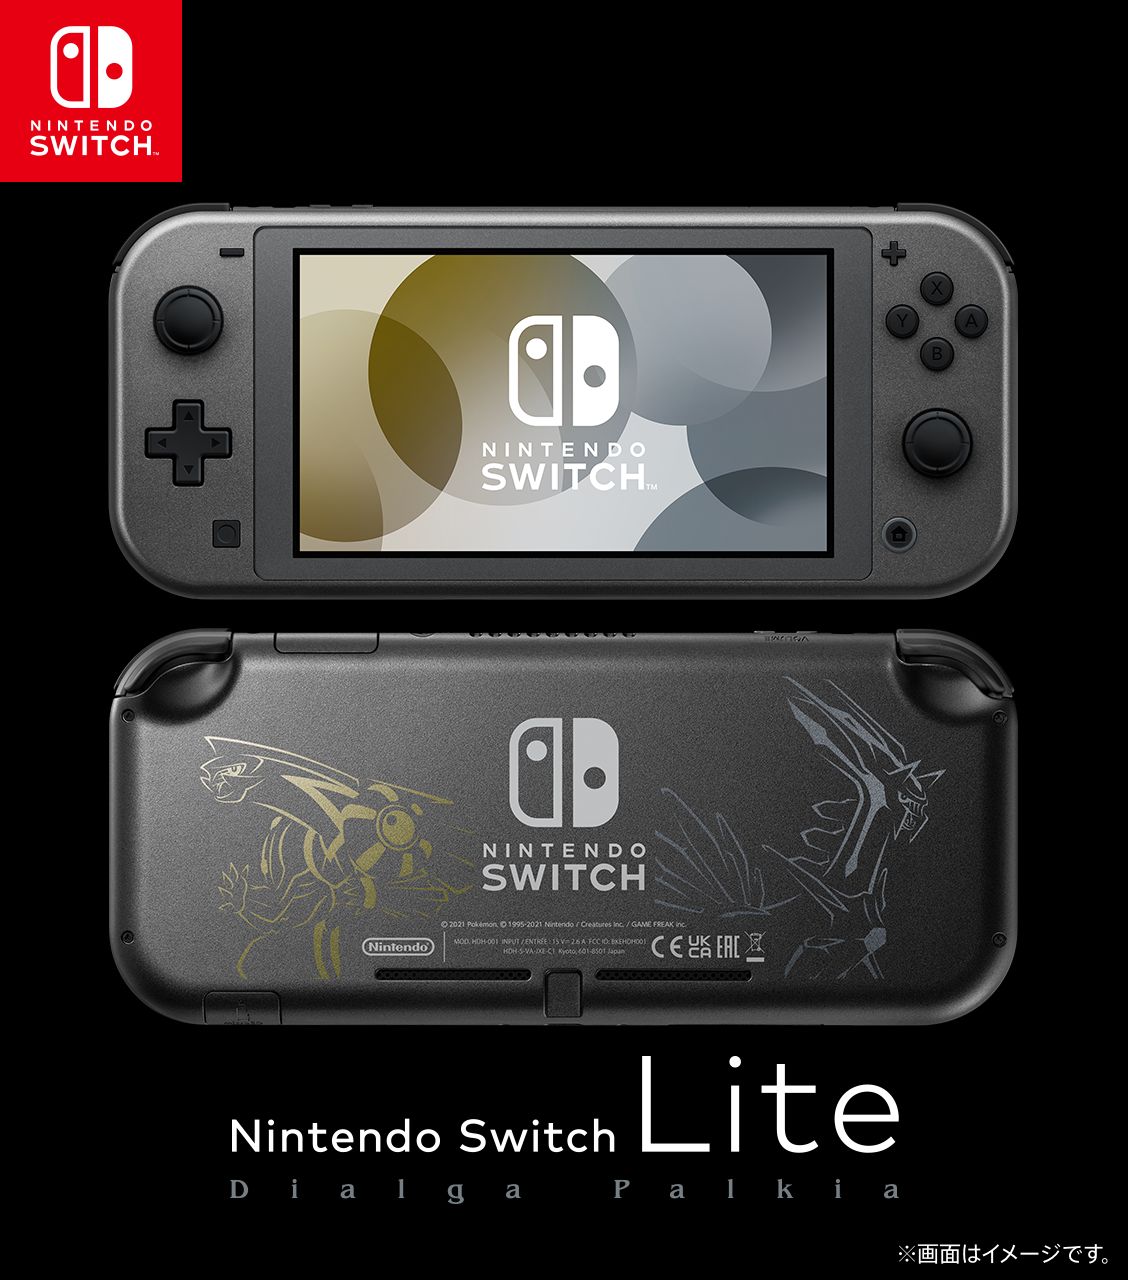 Nintendo Switch Lite グレー - 8